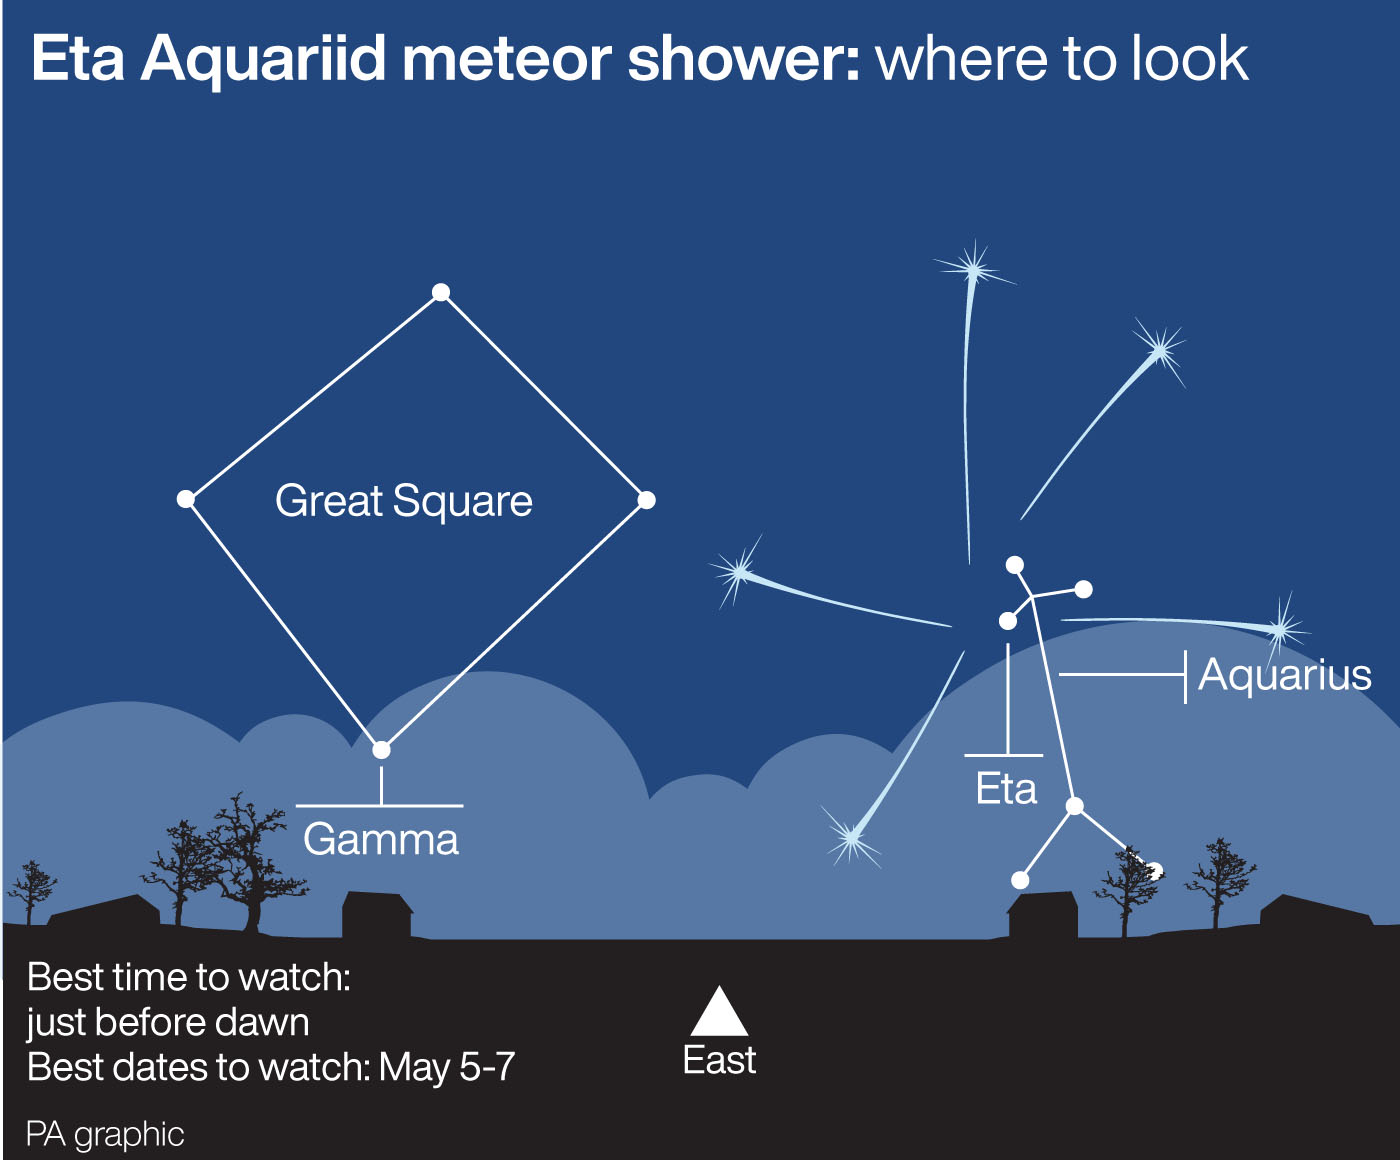 Eta Aquariids set to dazzle night skies with up to 40 meteors per hour